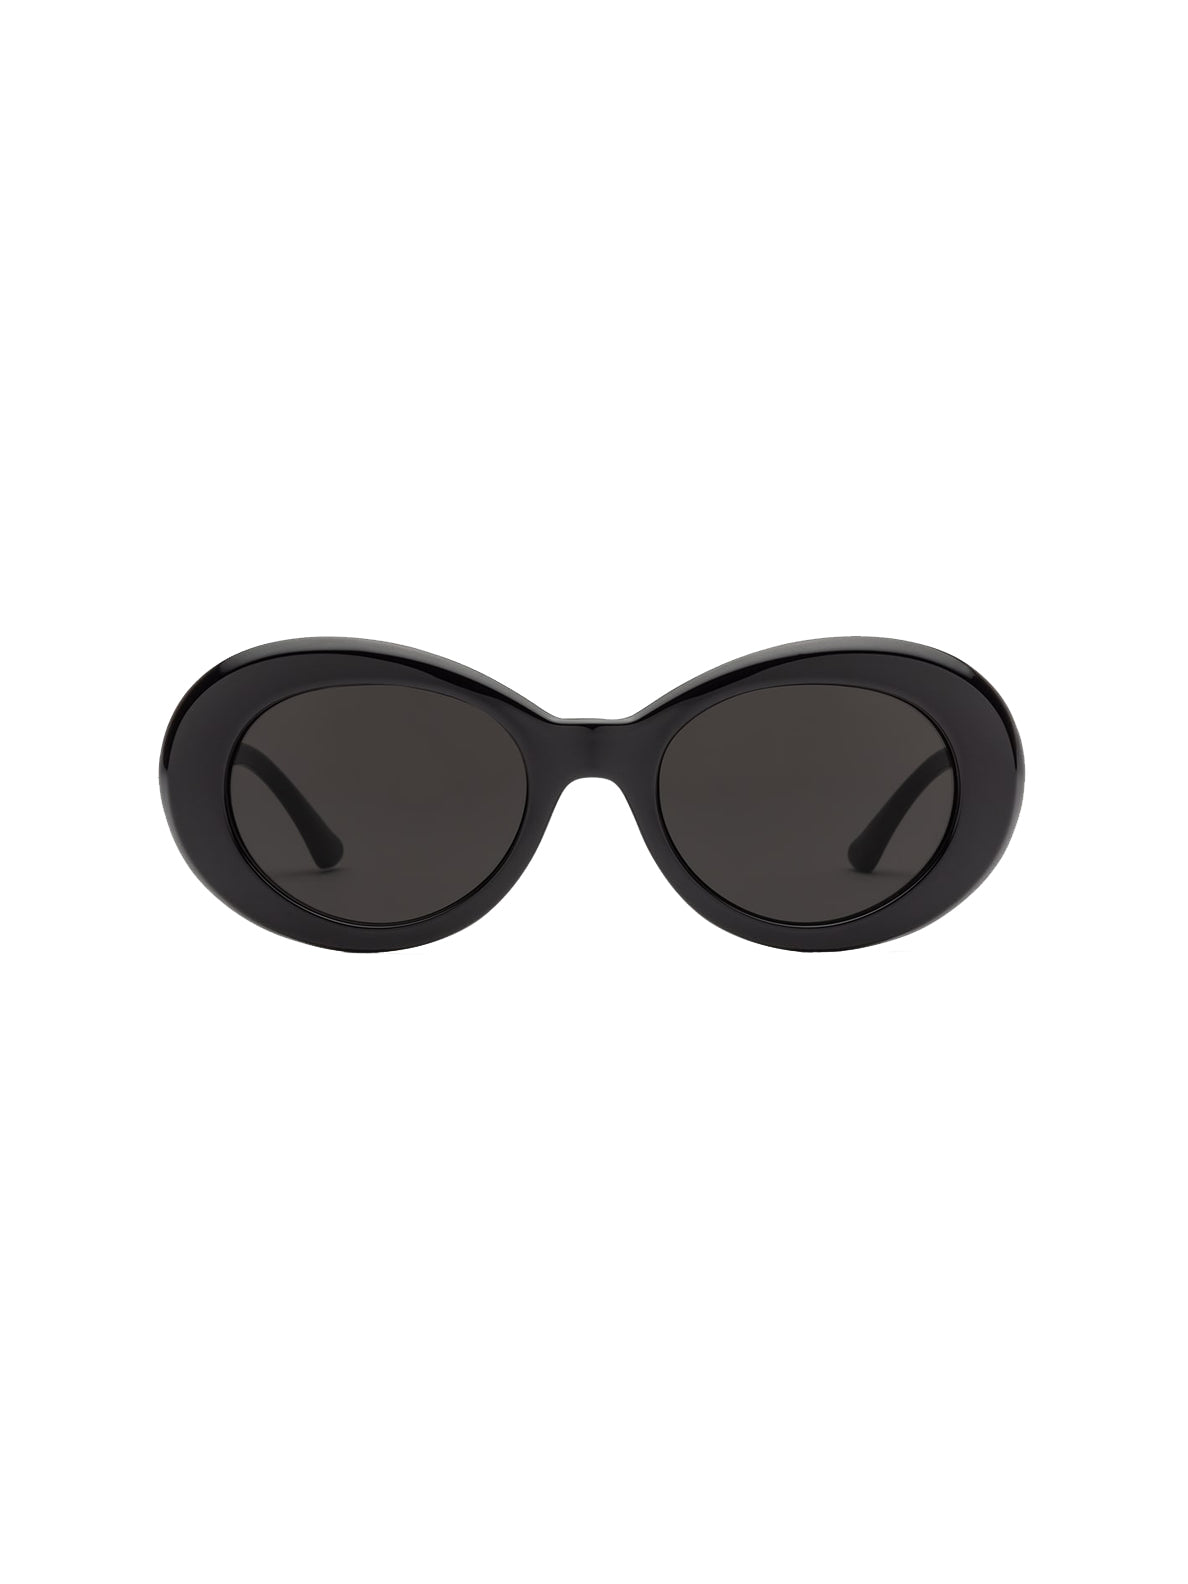 Volcom Stoned Sunglasses GlossBlack Gray